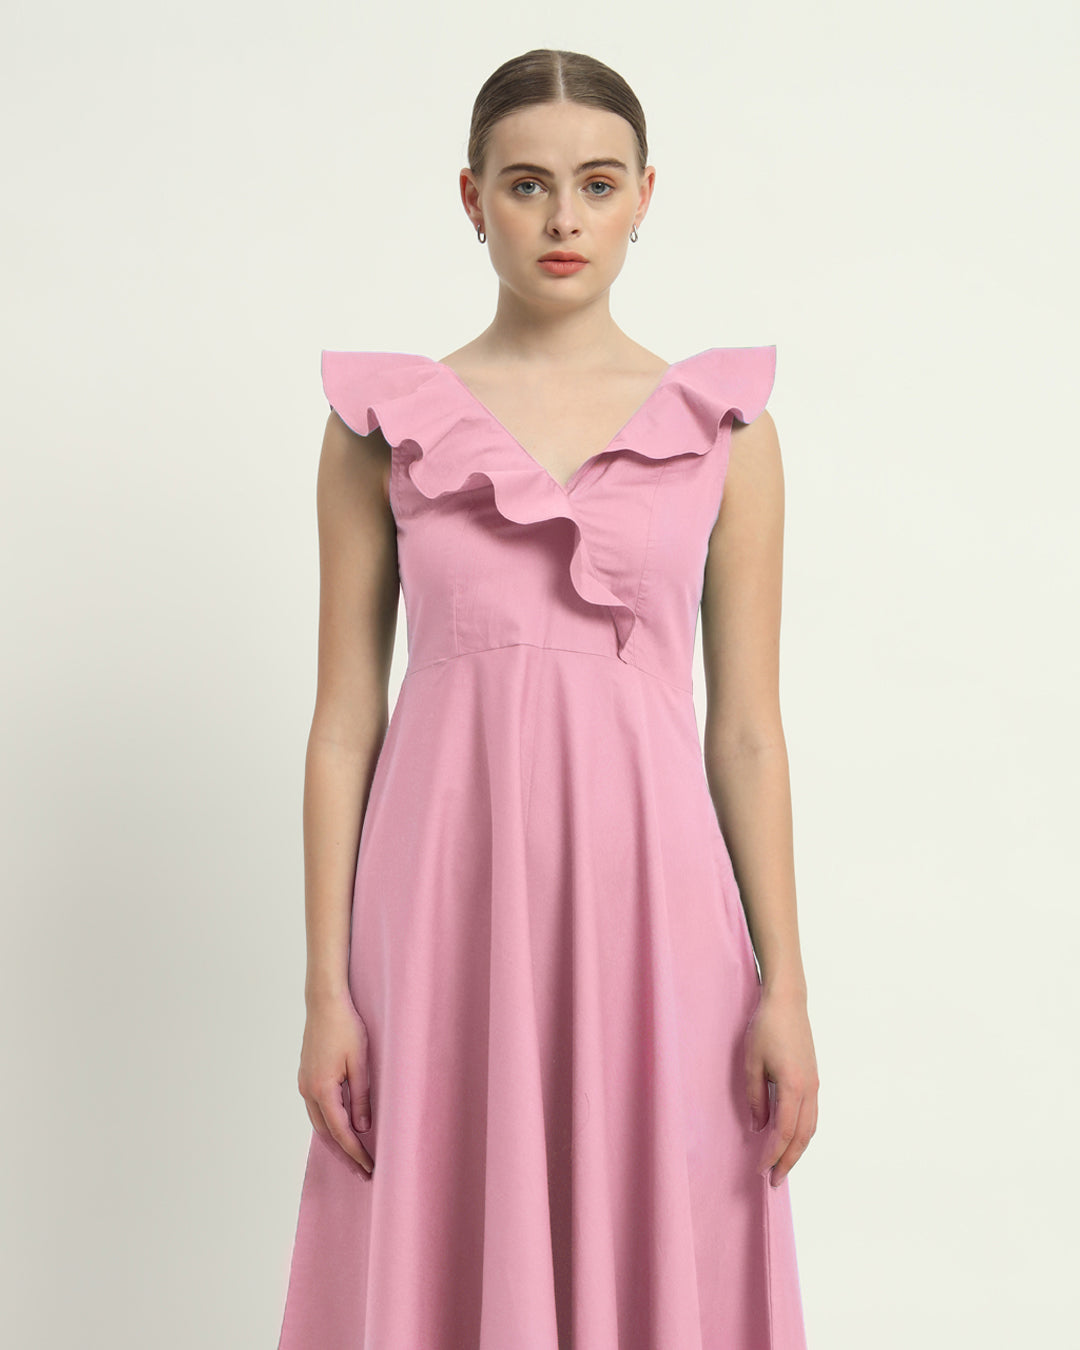 The Albany Fondant Pink Cotton Dress